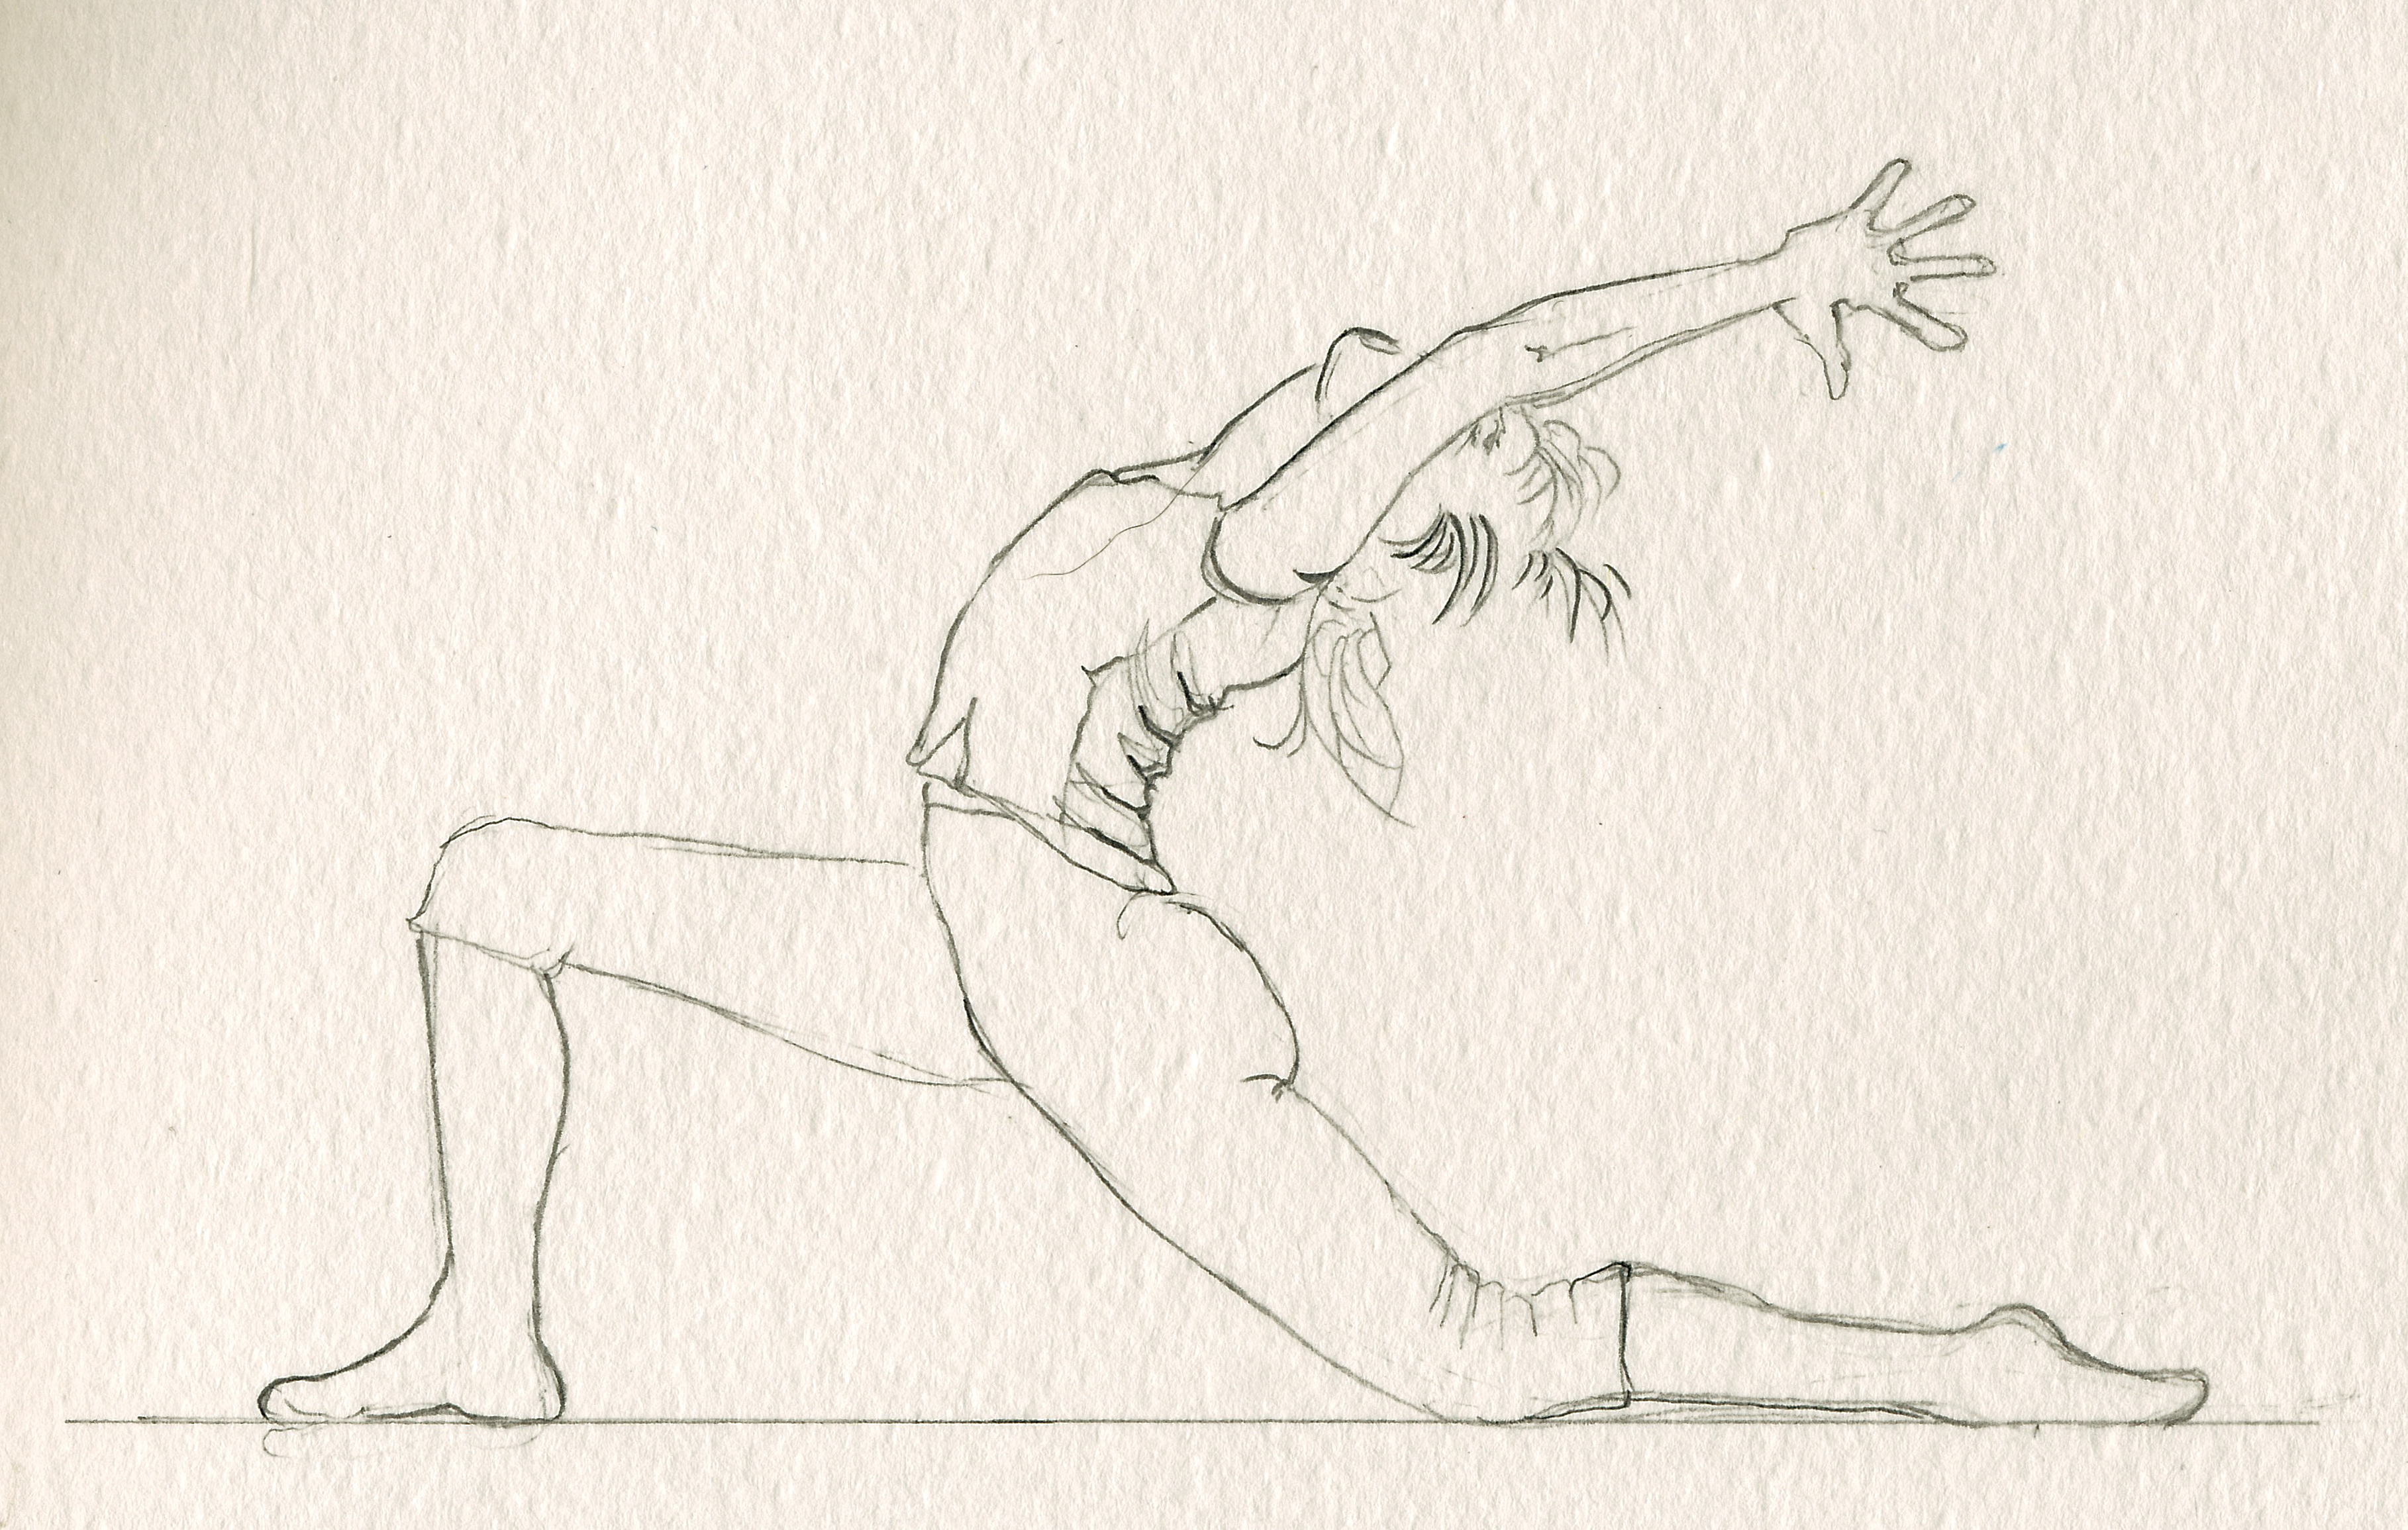 Yoga Poses Drawing at GetDrawings Free download